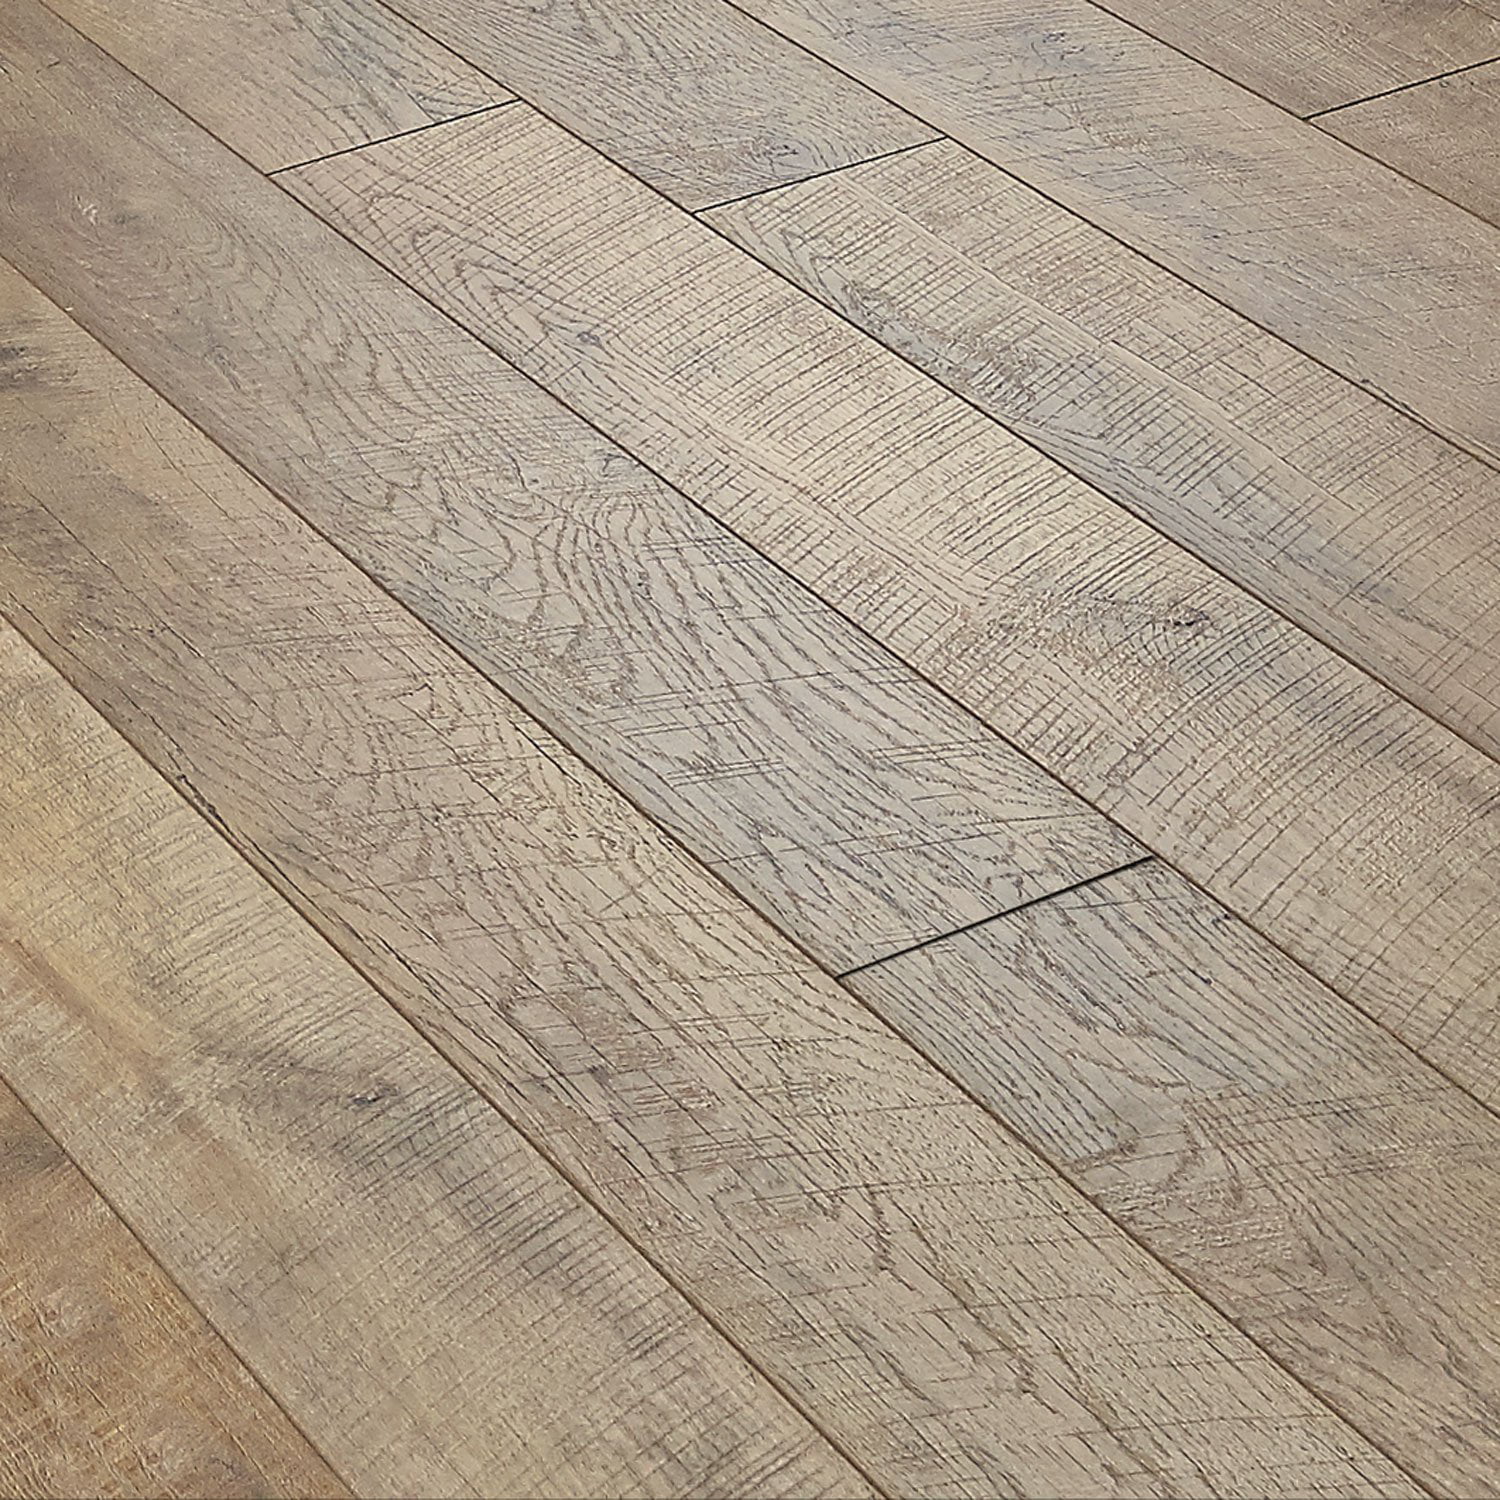 Select Surfaces Laminate Flooring Driftwood 6 Planks 12 50 Sq Ft Walmart Com Walmart Com